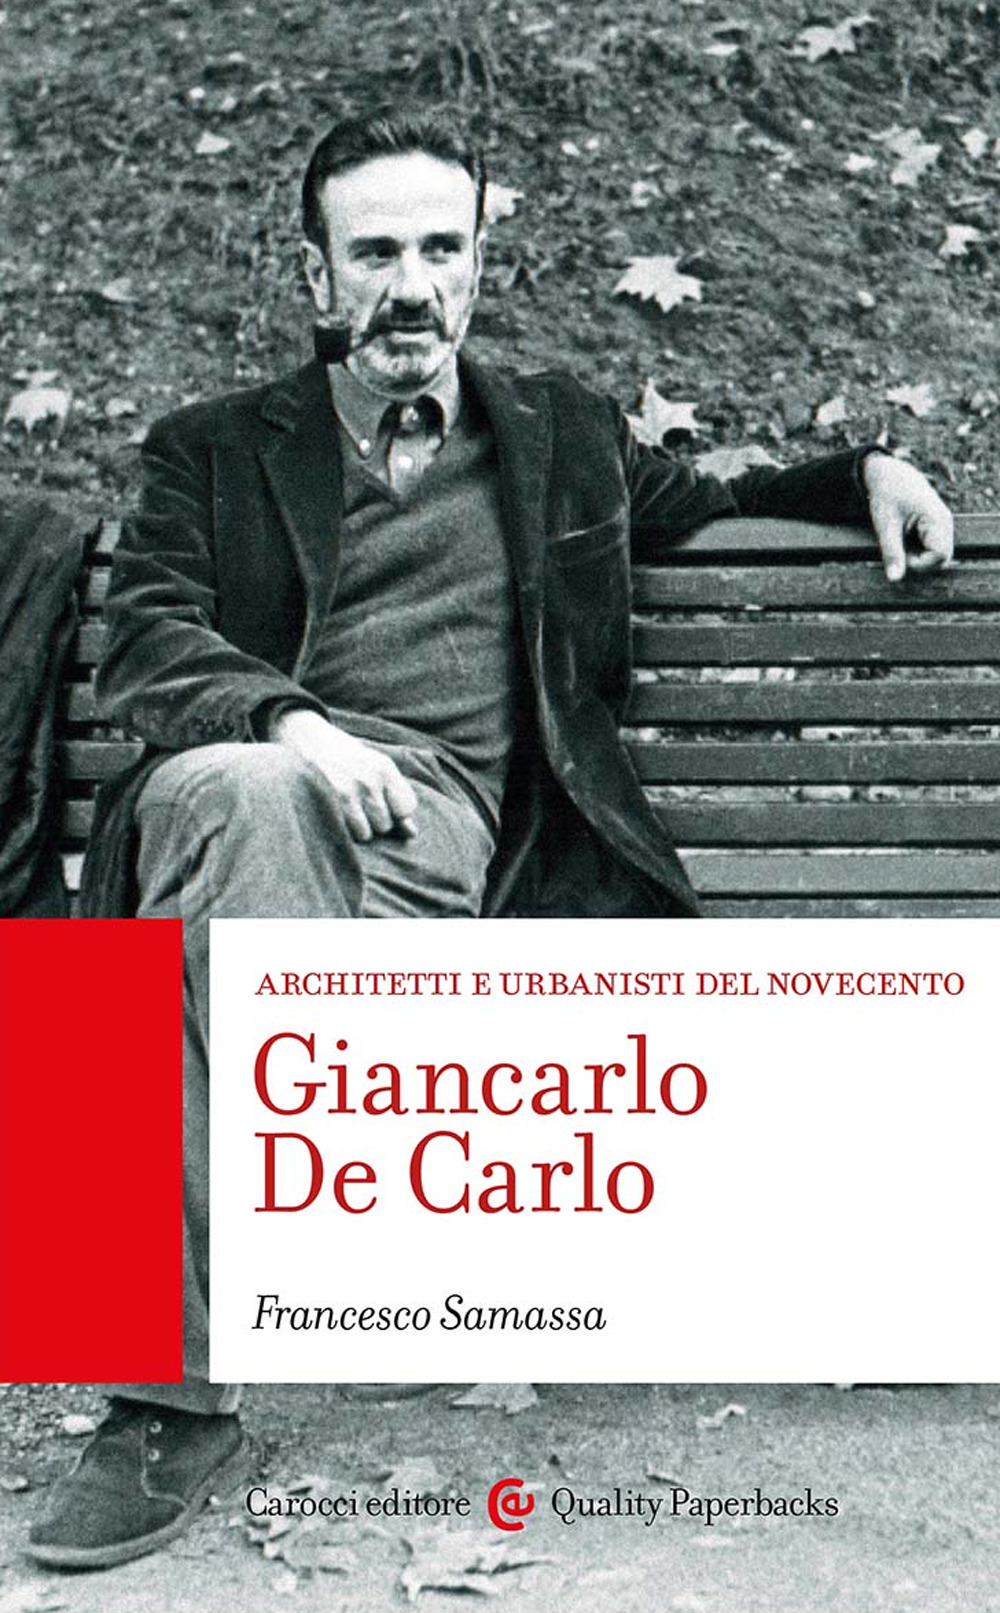 Giancarlo De Carlo